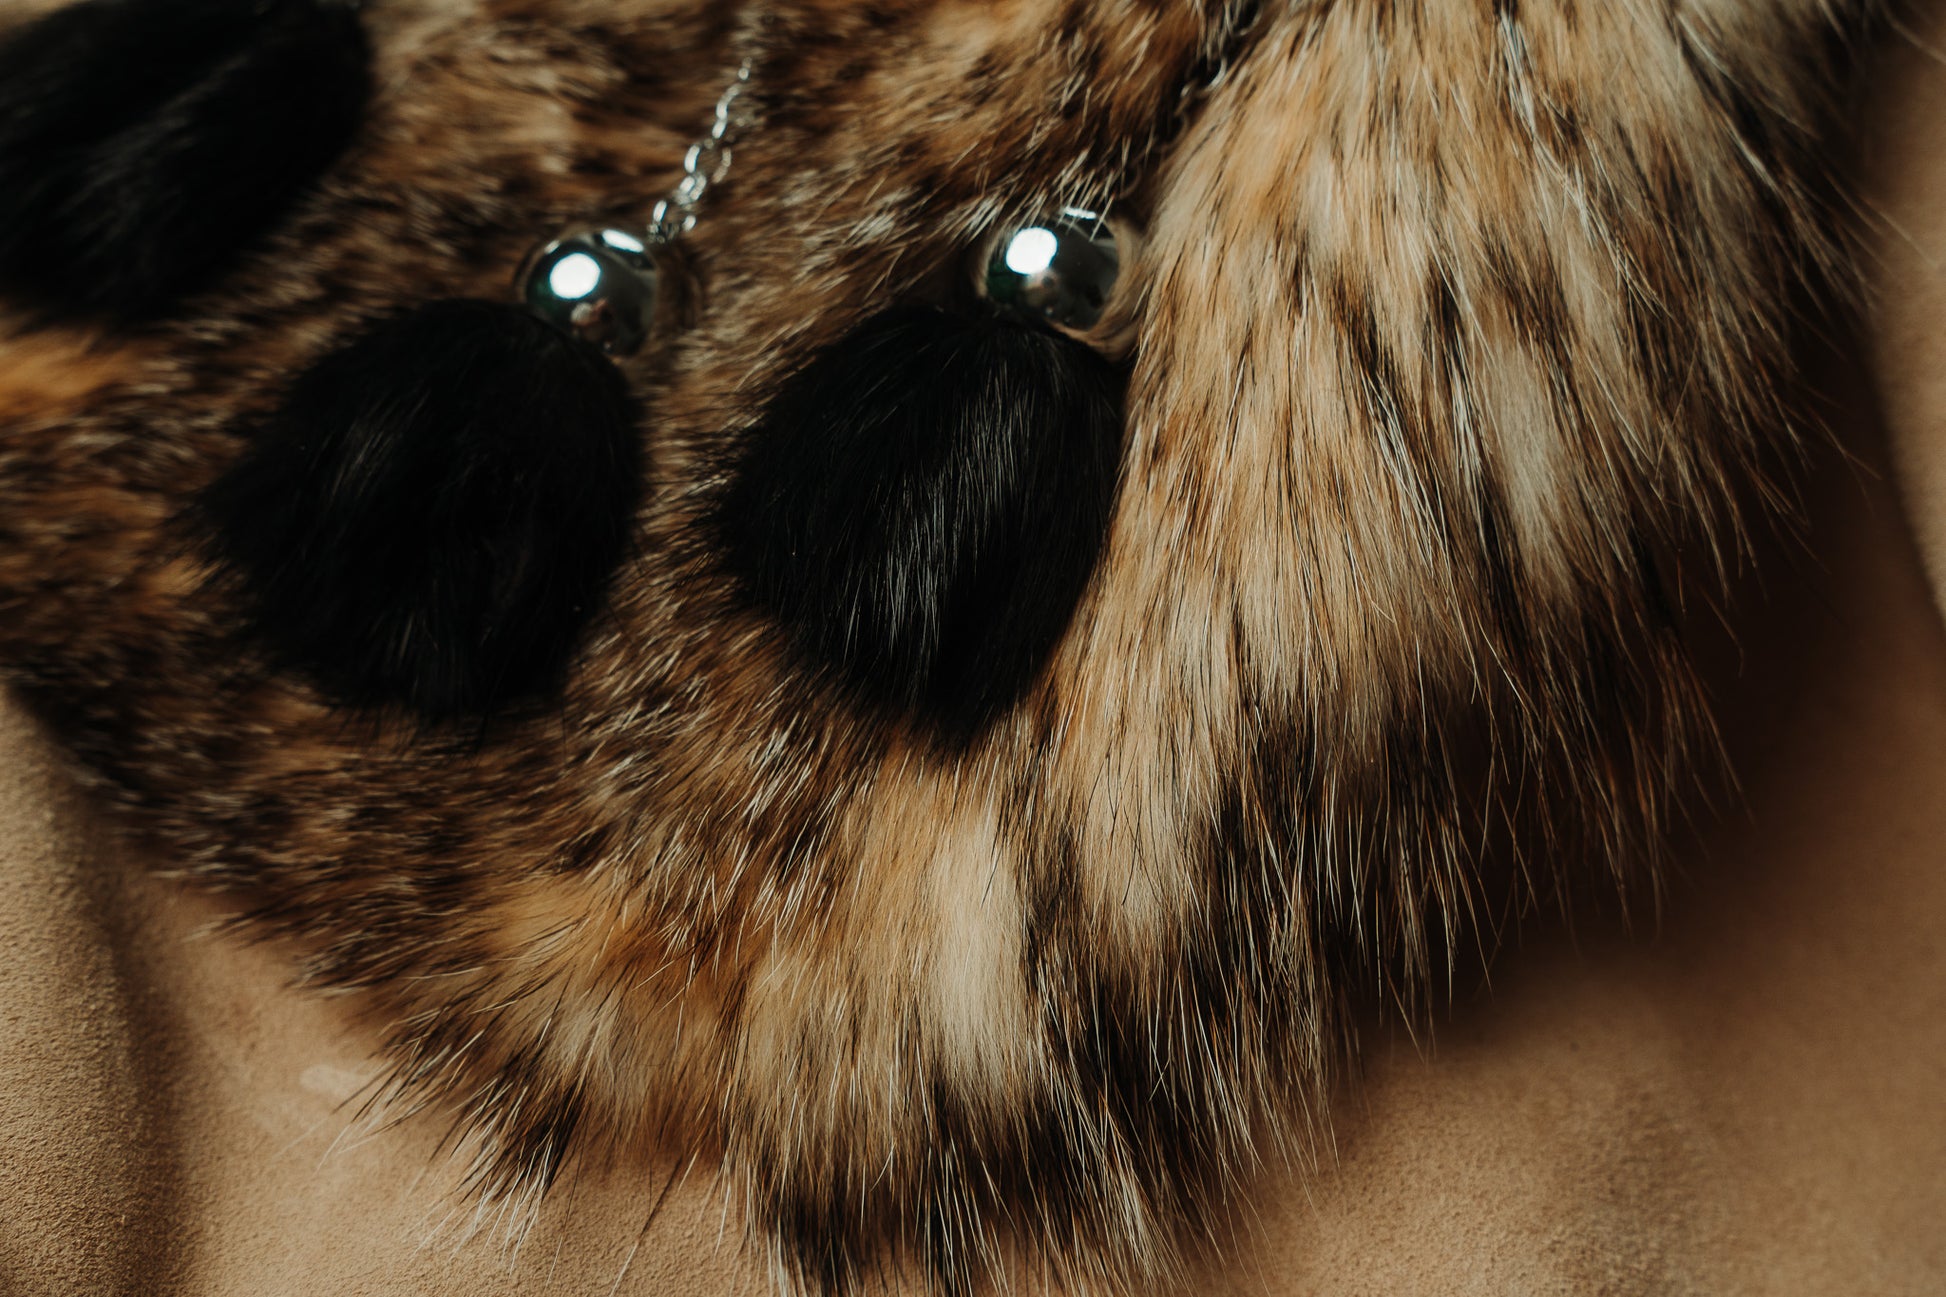 sporran features luxurious badger fur and three black muskrat fur tassels.